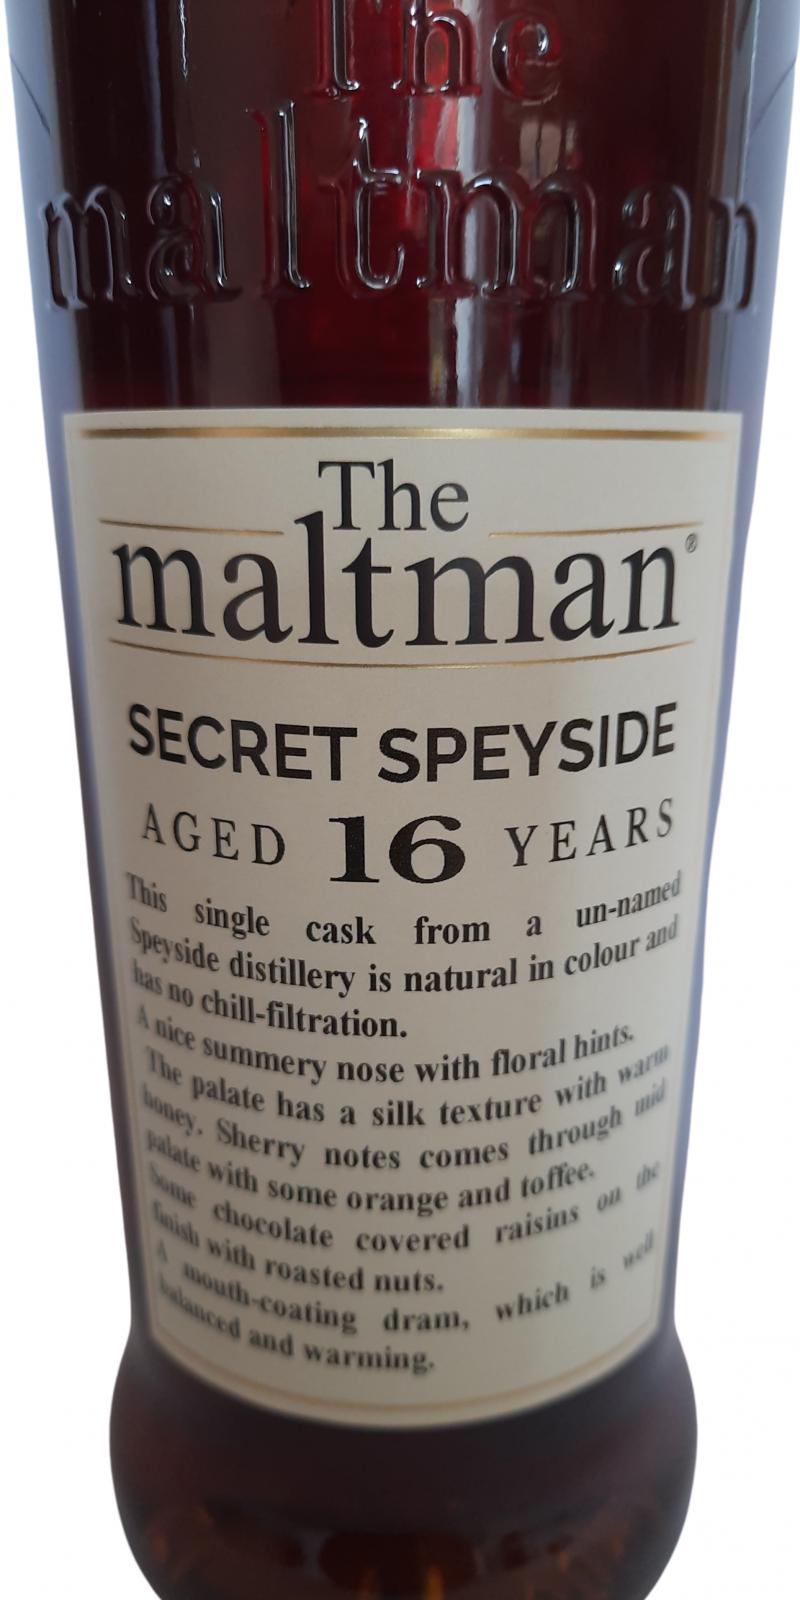 Secret Speyside Distillery 2003 MBl